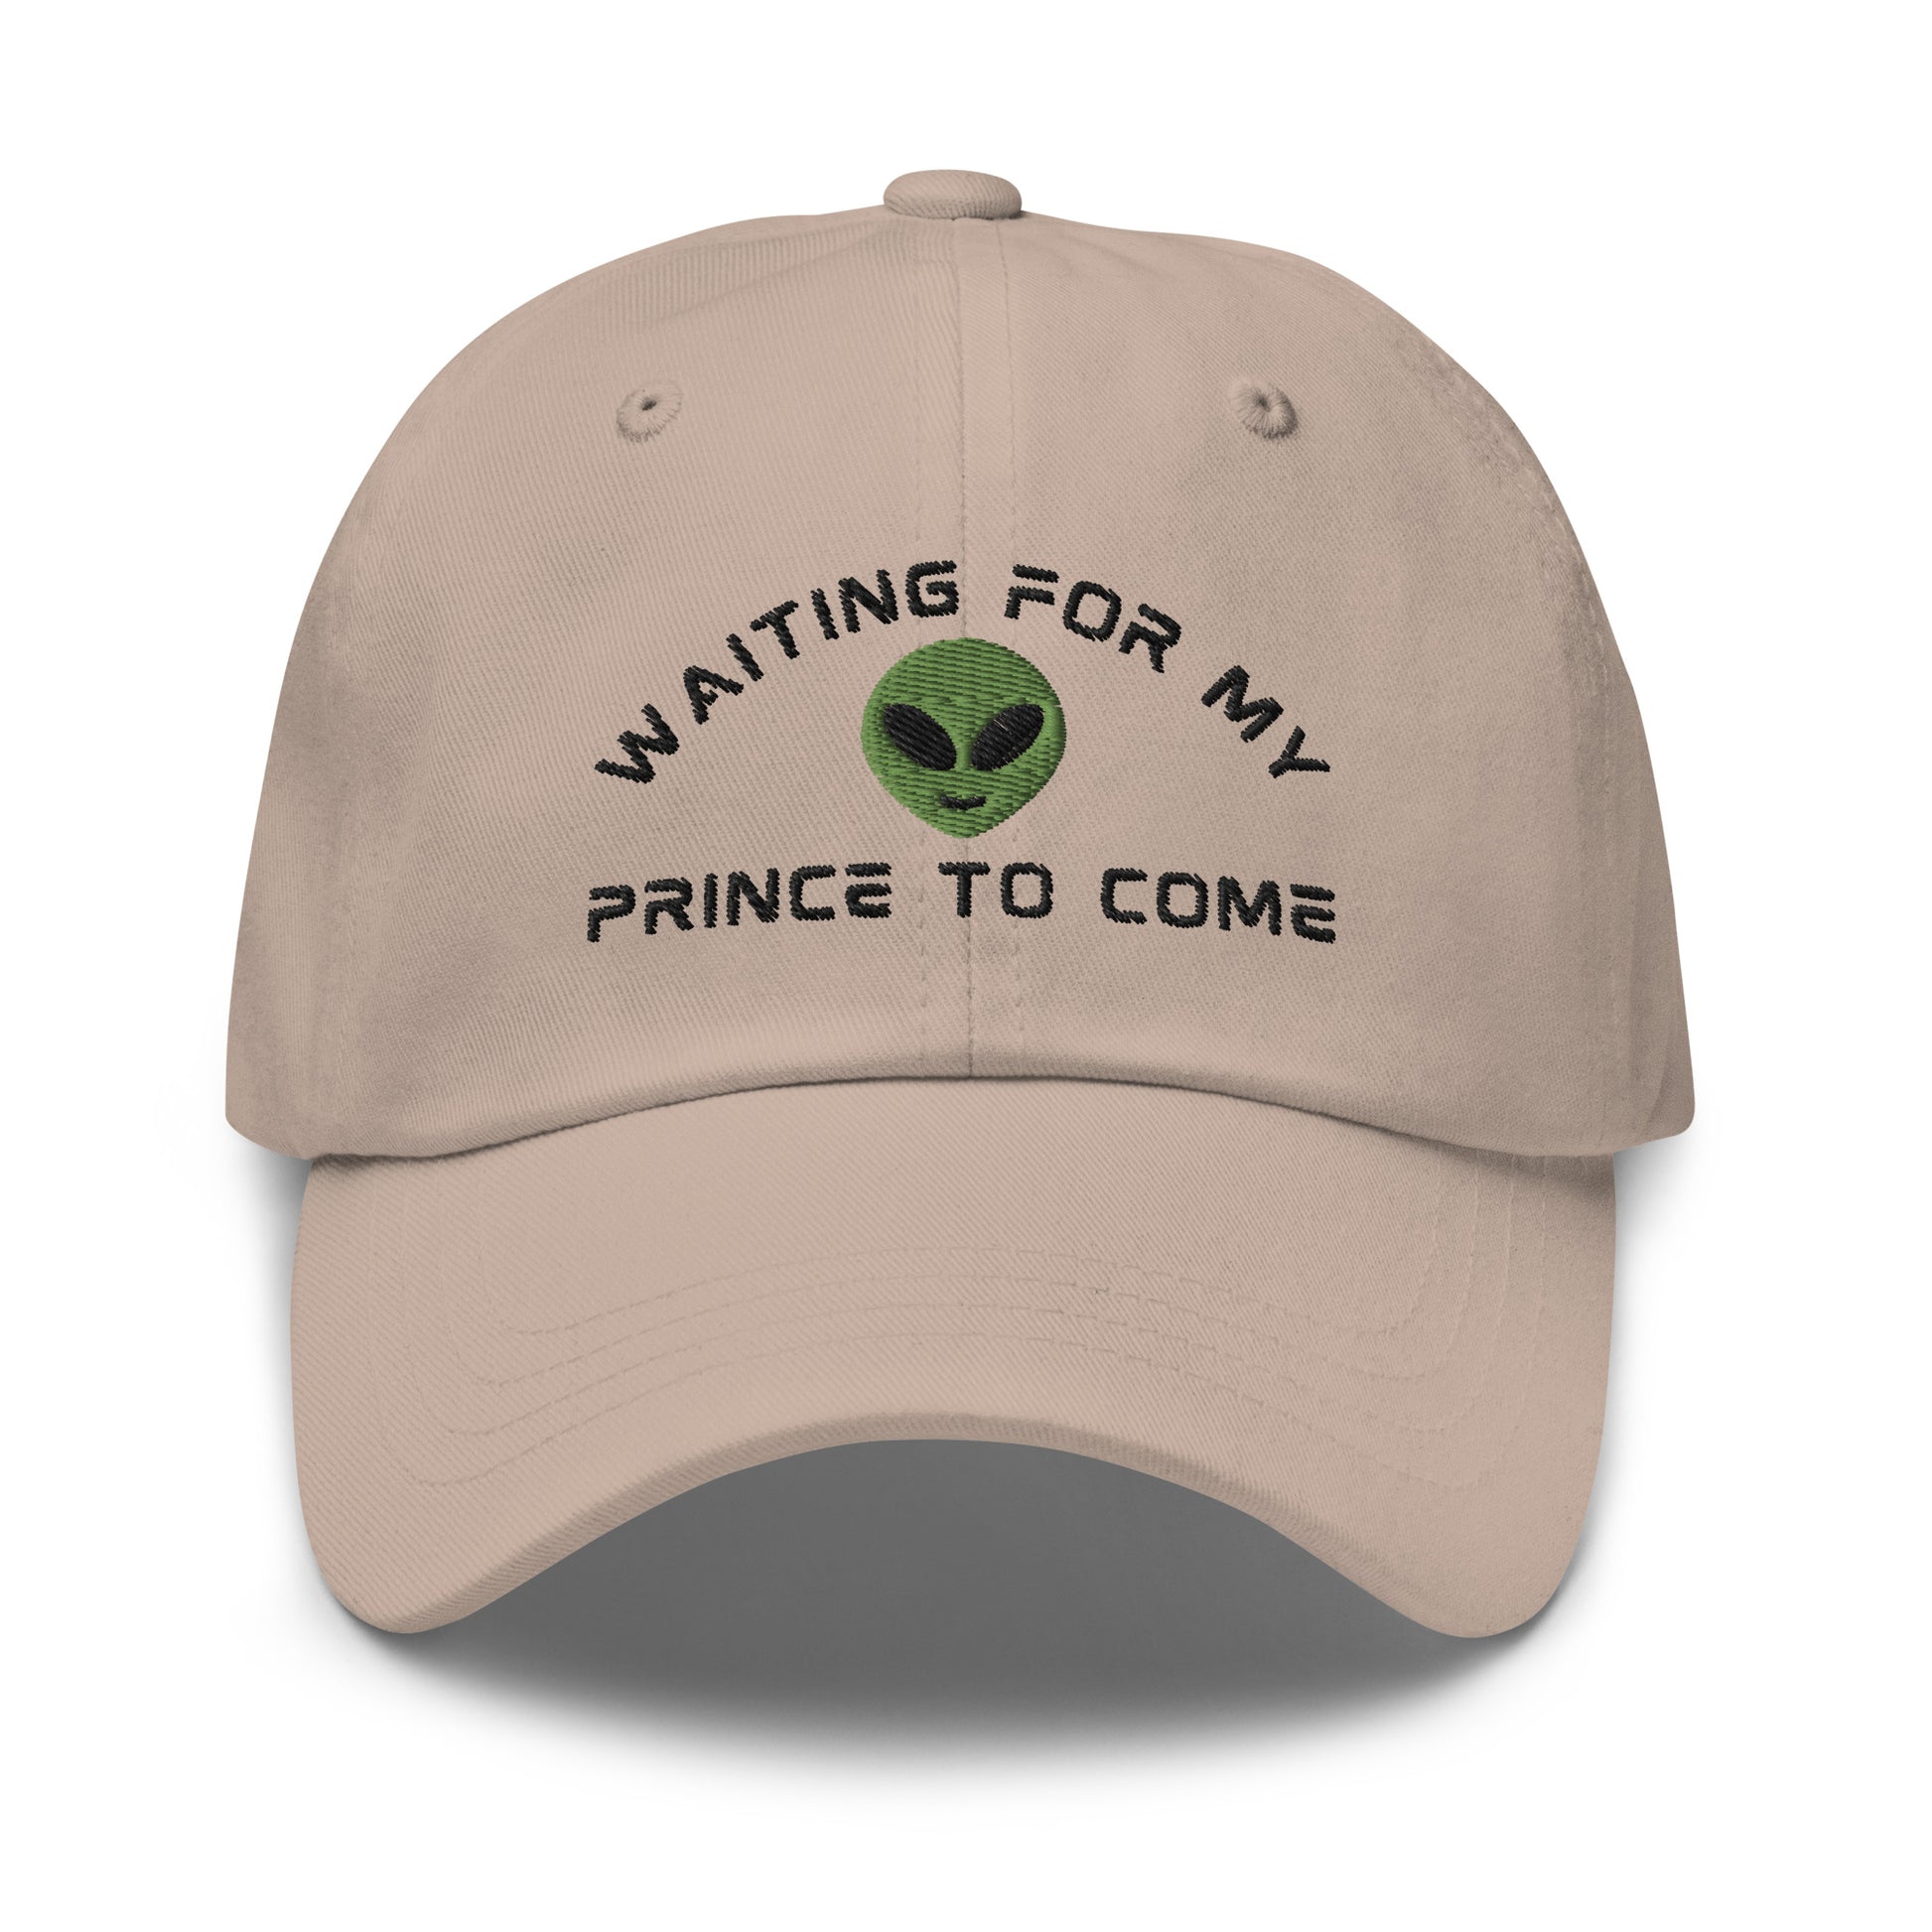 Alien Romance Sci-fi Book Hat “My prince will come” in tan